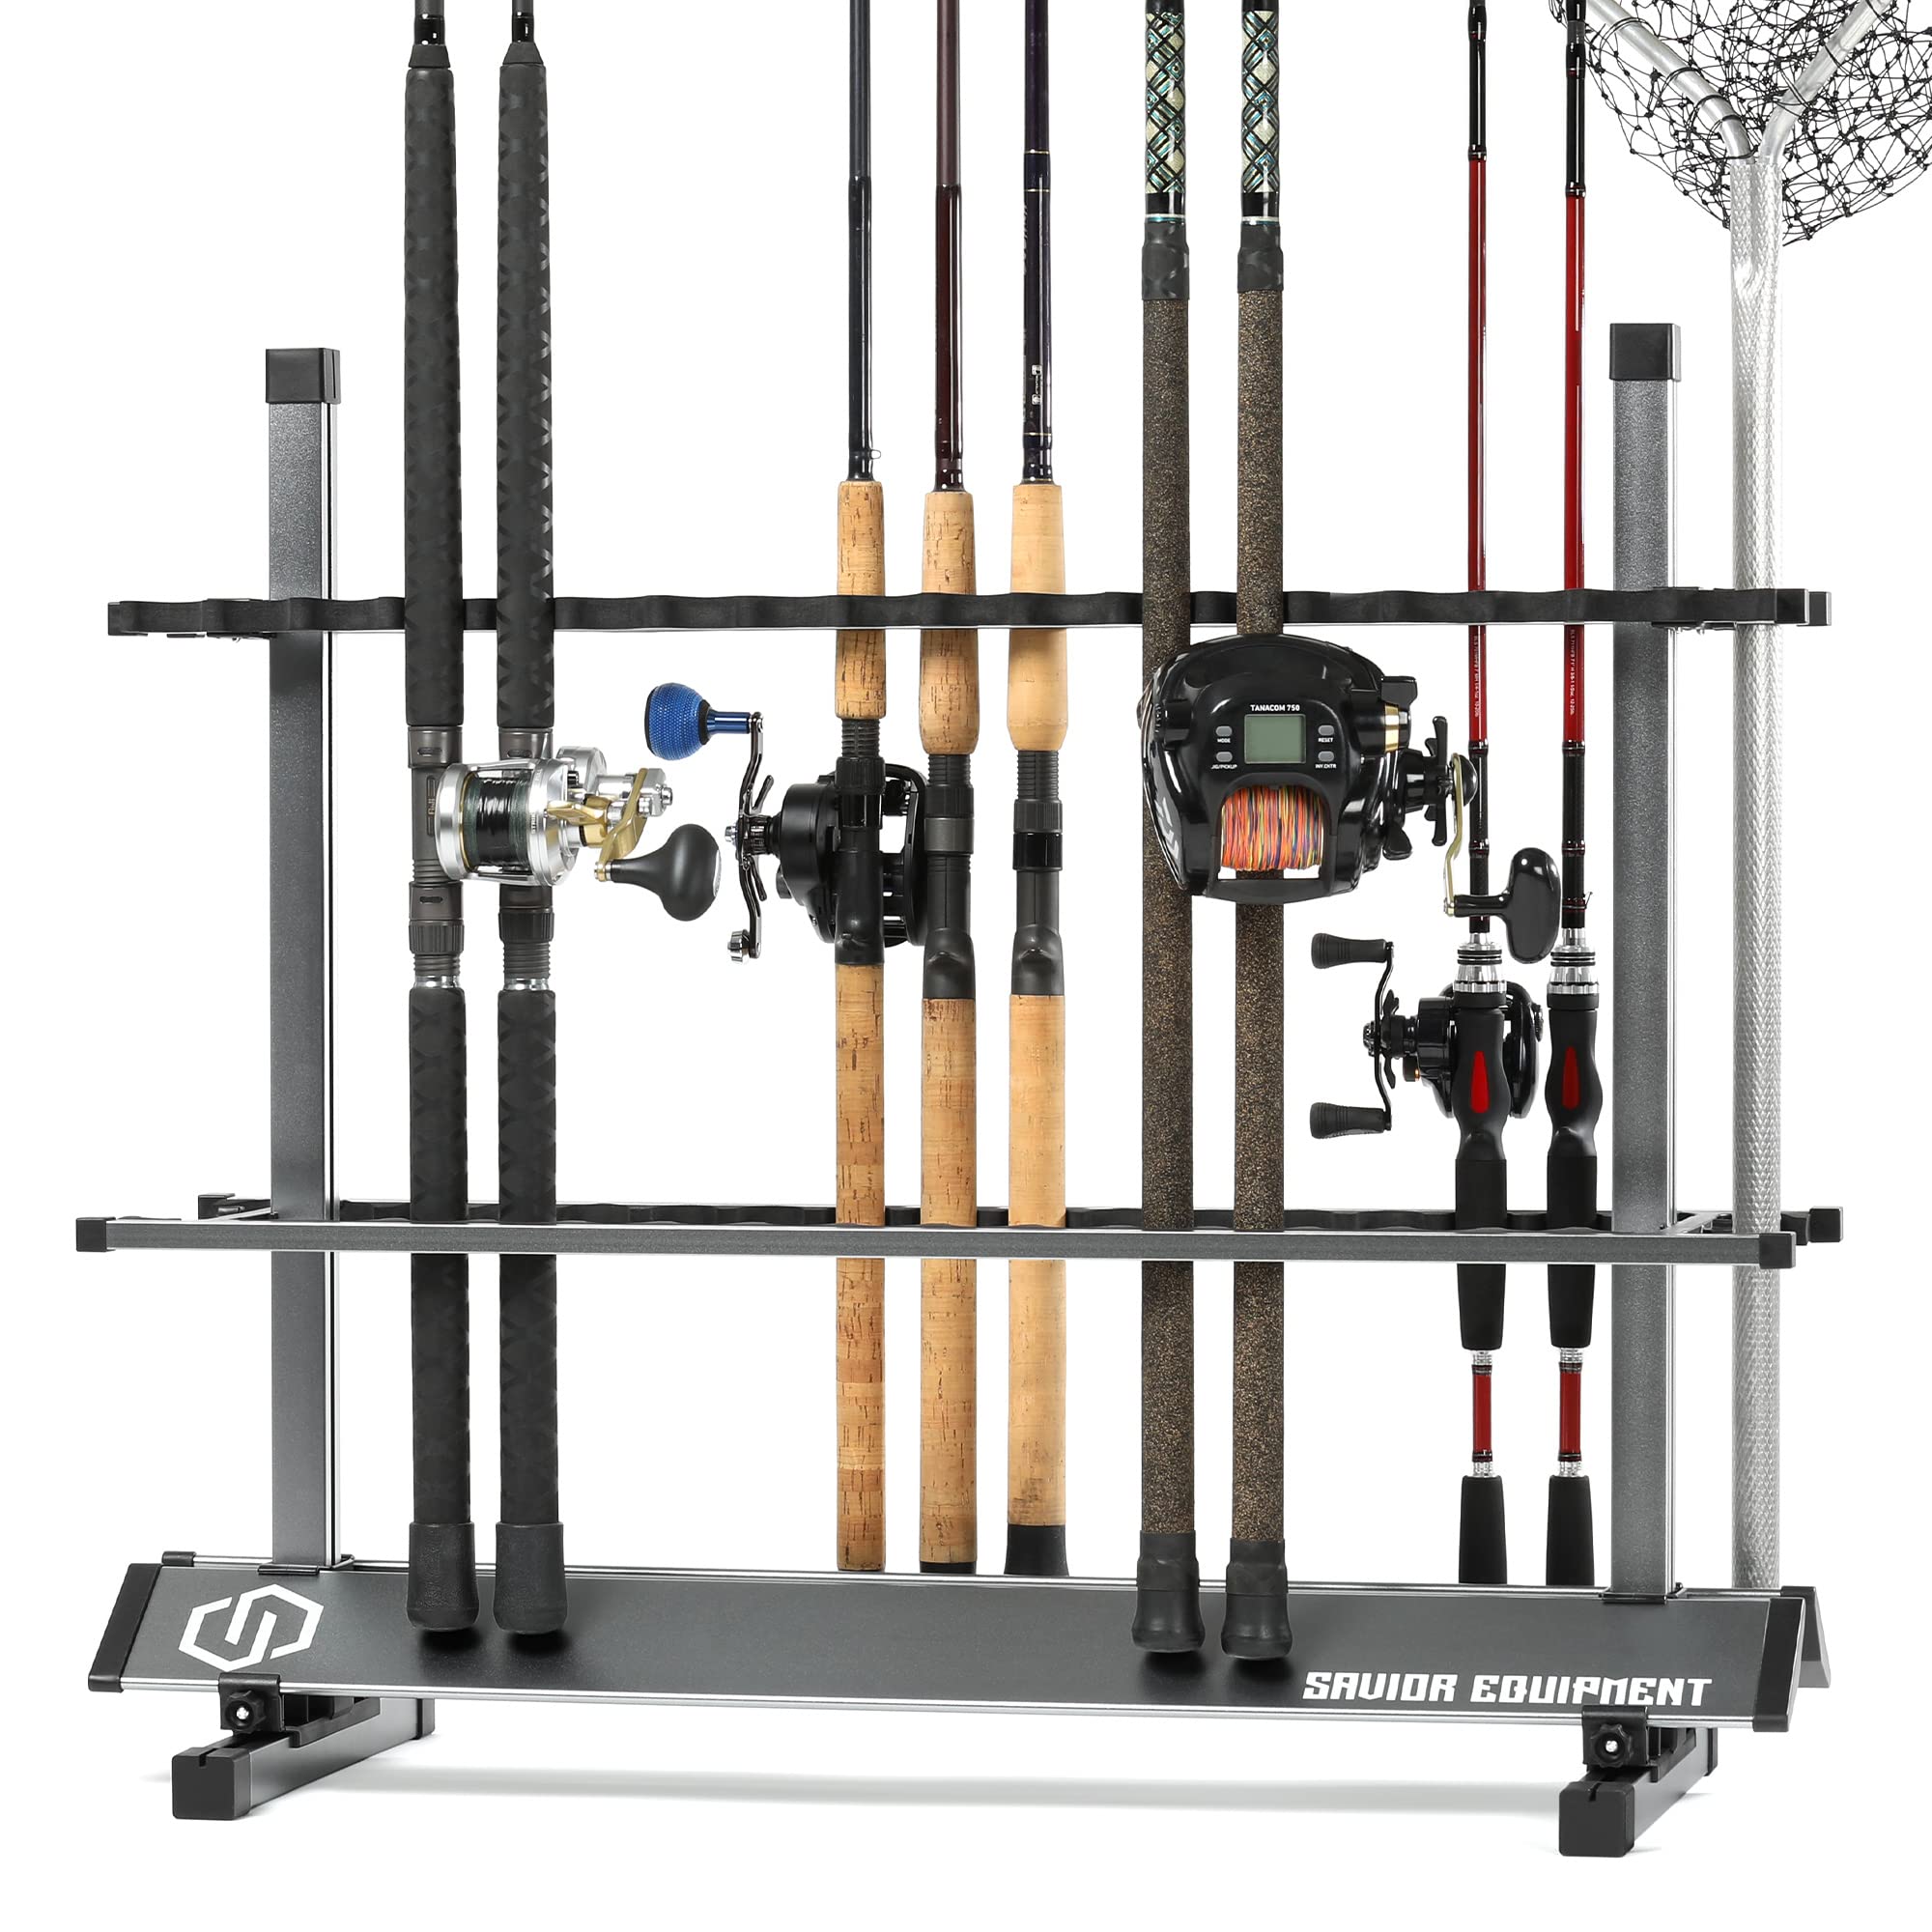 Savior Equipment Fishing Rod Rack Holder Organizer, Lightweight Aluminum Vertical  Fish Pole Garage Storage Ground Display Stand